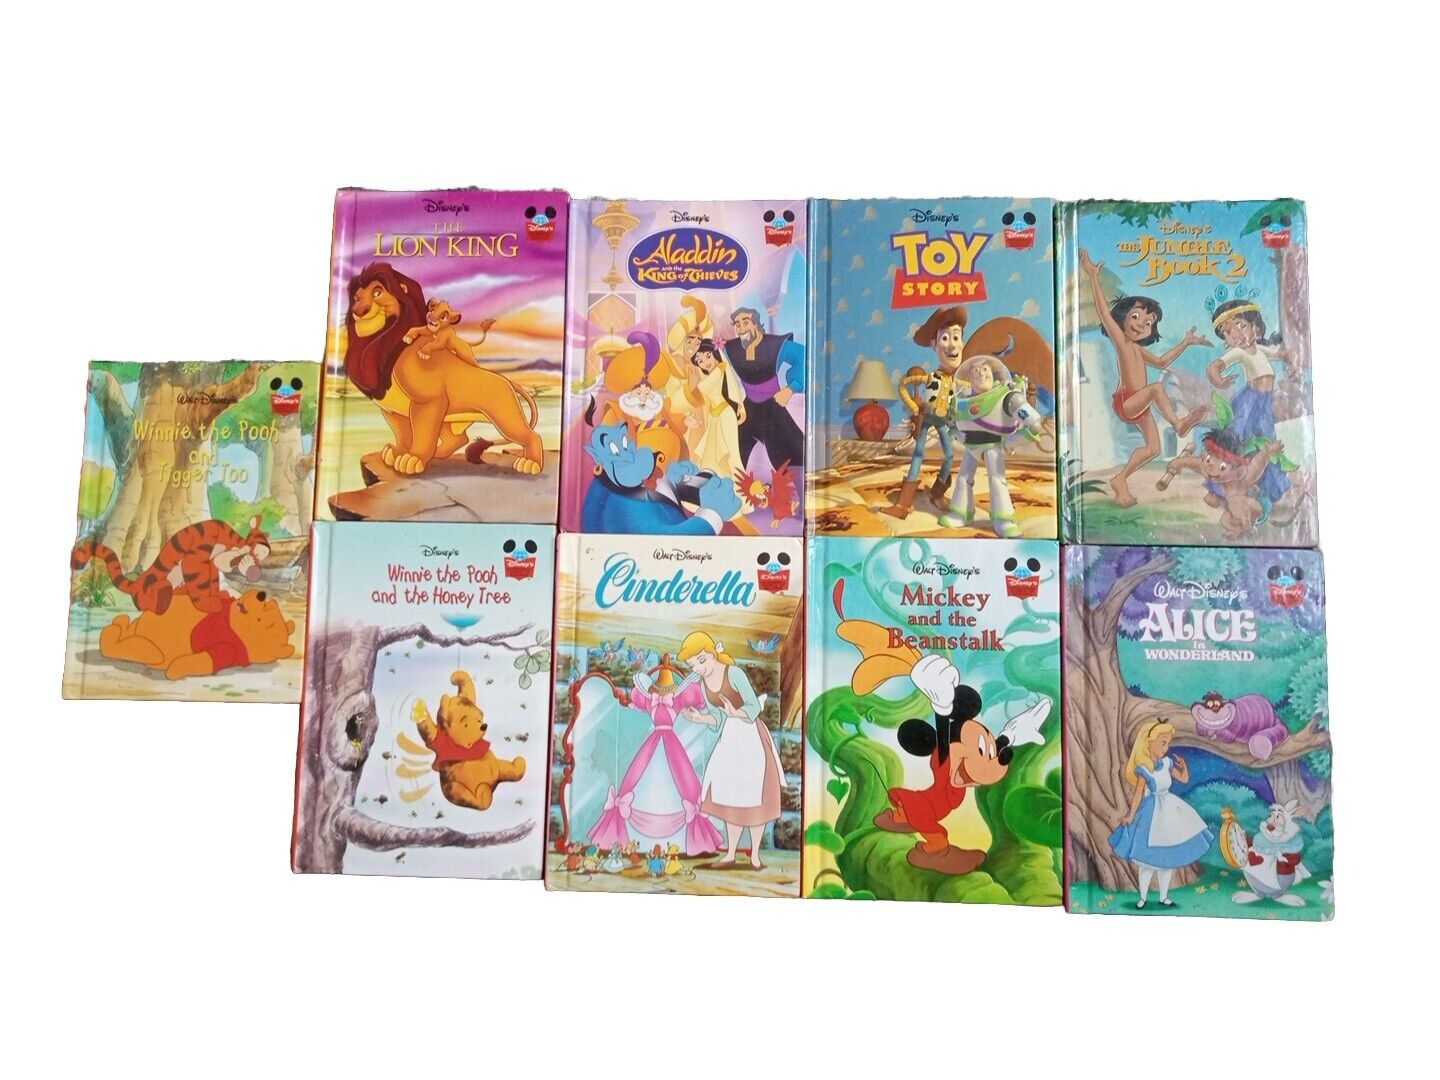 Disney Wonderful World Of Reading Hardcover Books The Lion King Cinderella Ect.